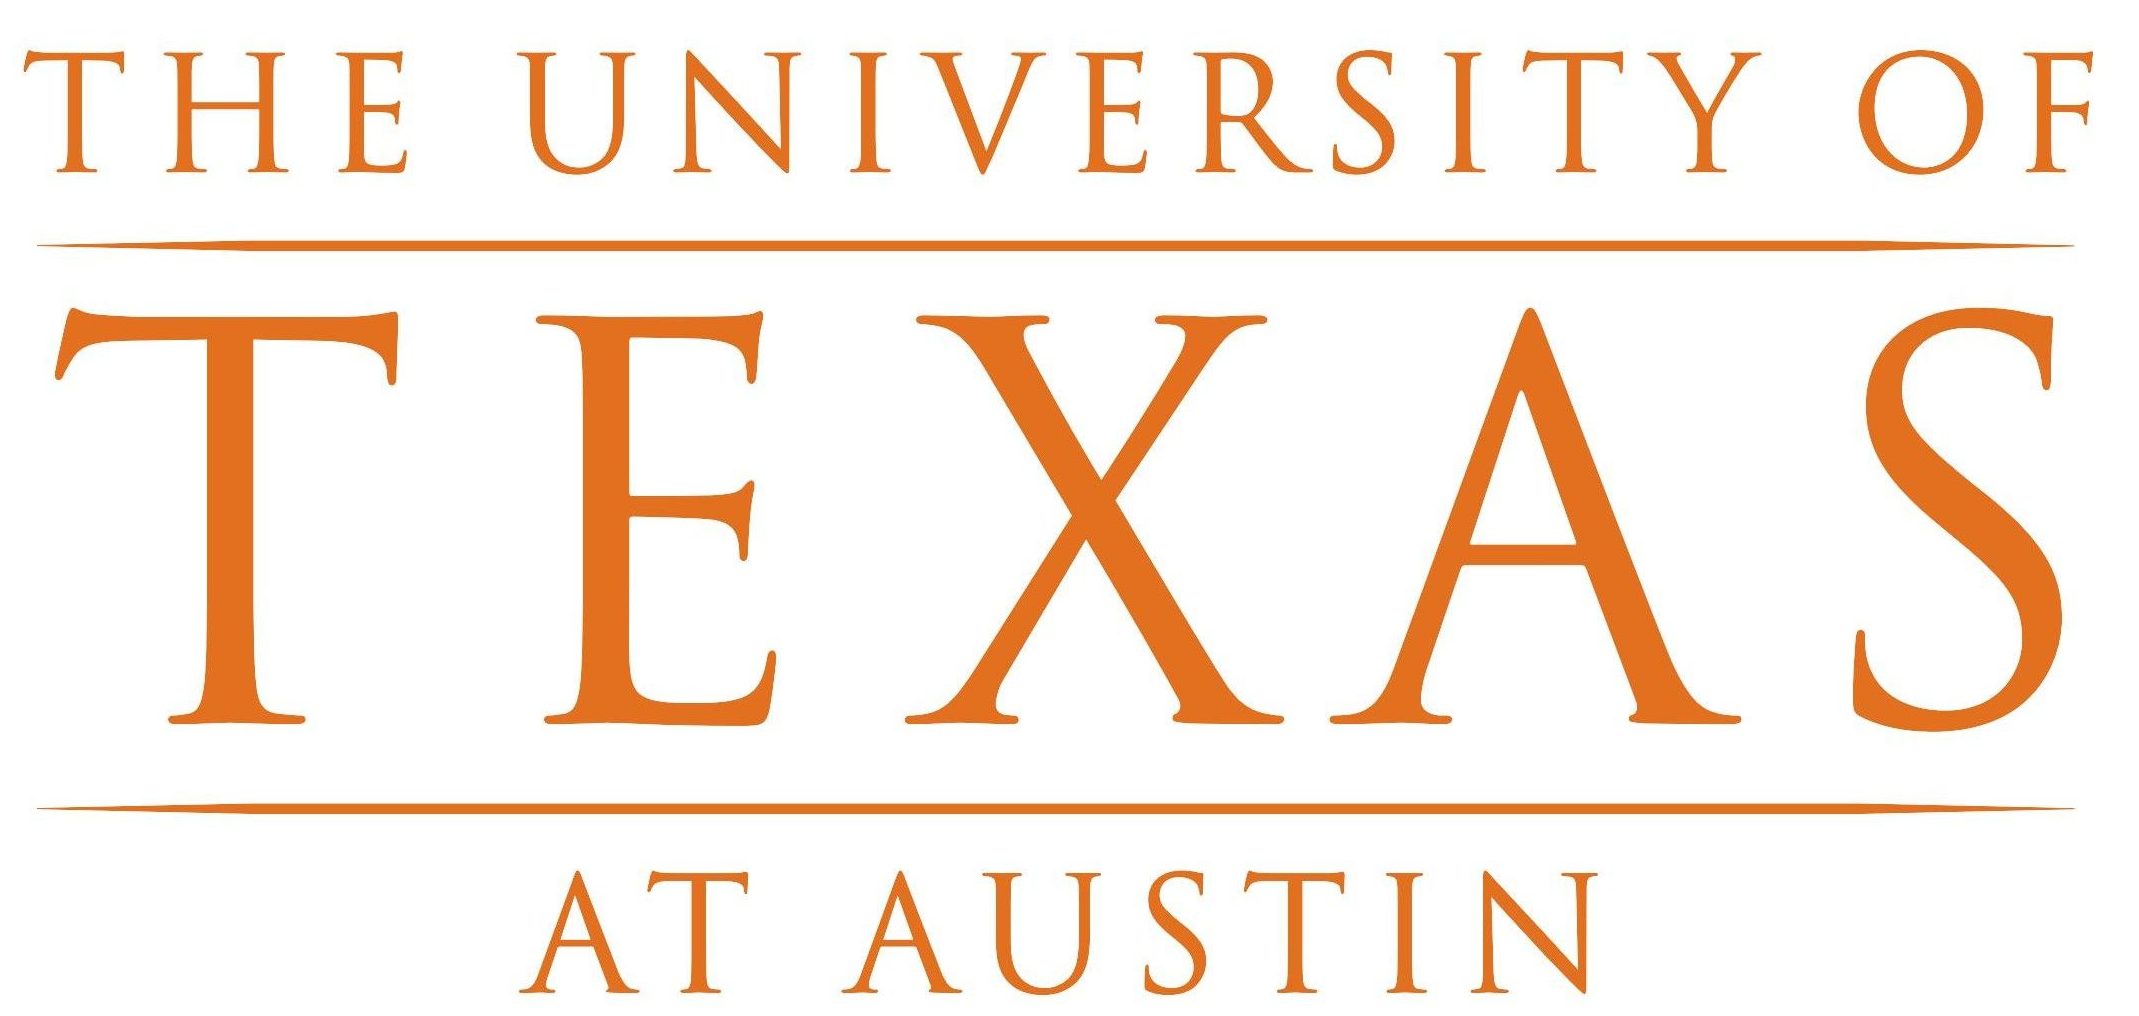 University Of Texas At Austin